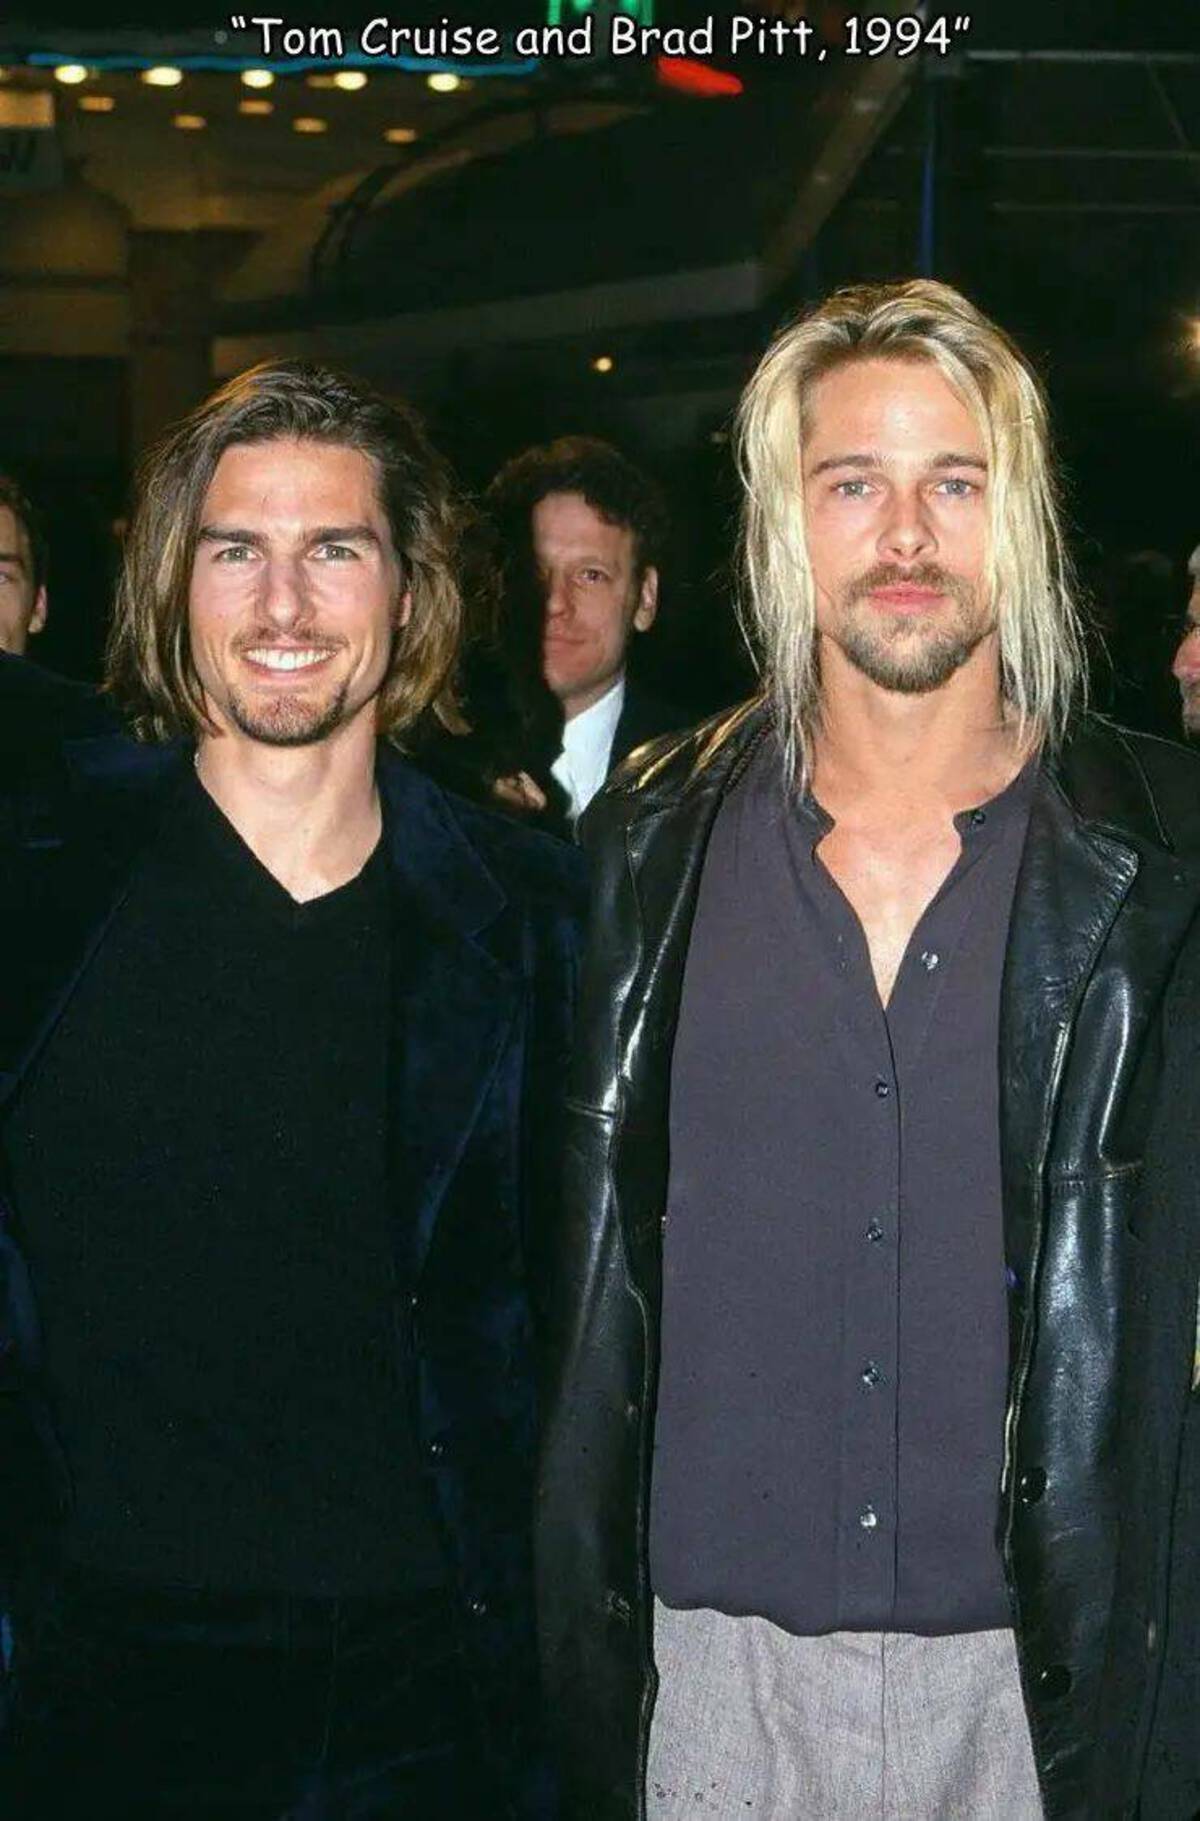 brad pitt e tom cruise - "Tom Cruise and Brad Pitt, 1994"